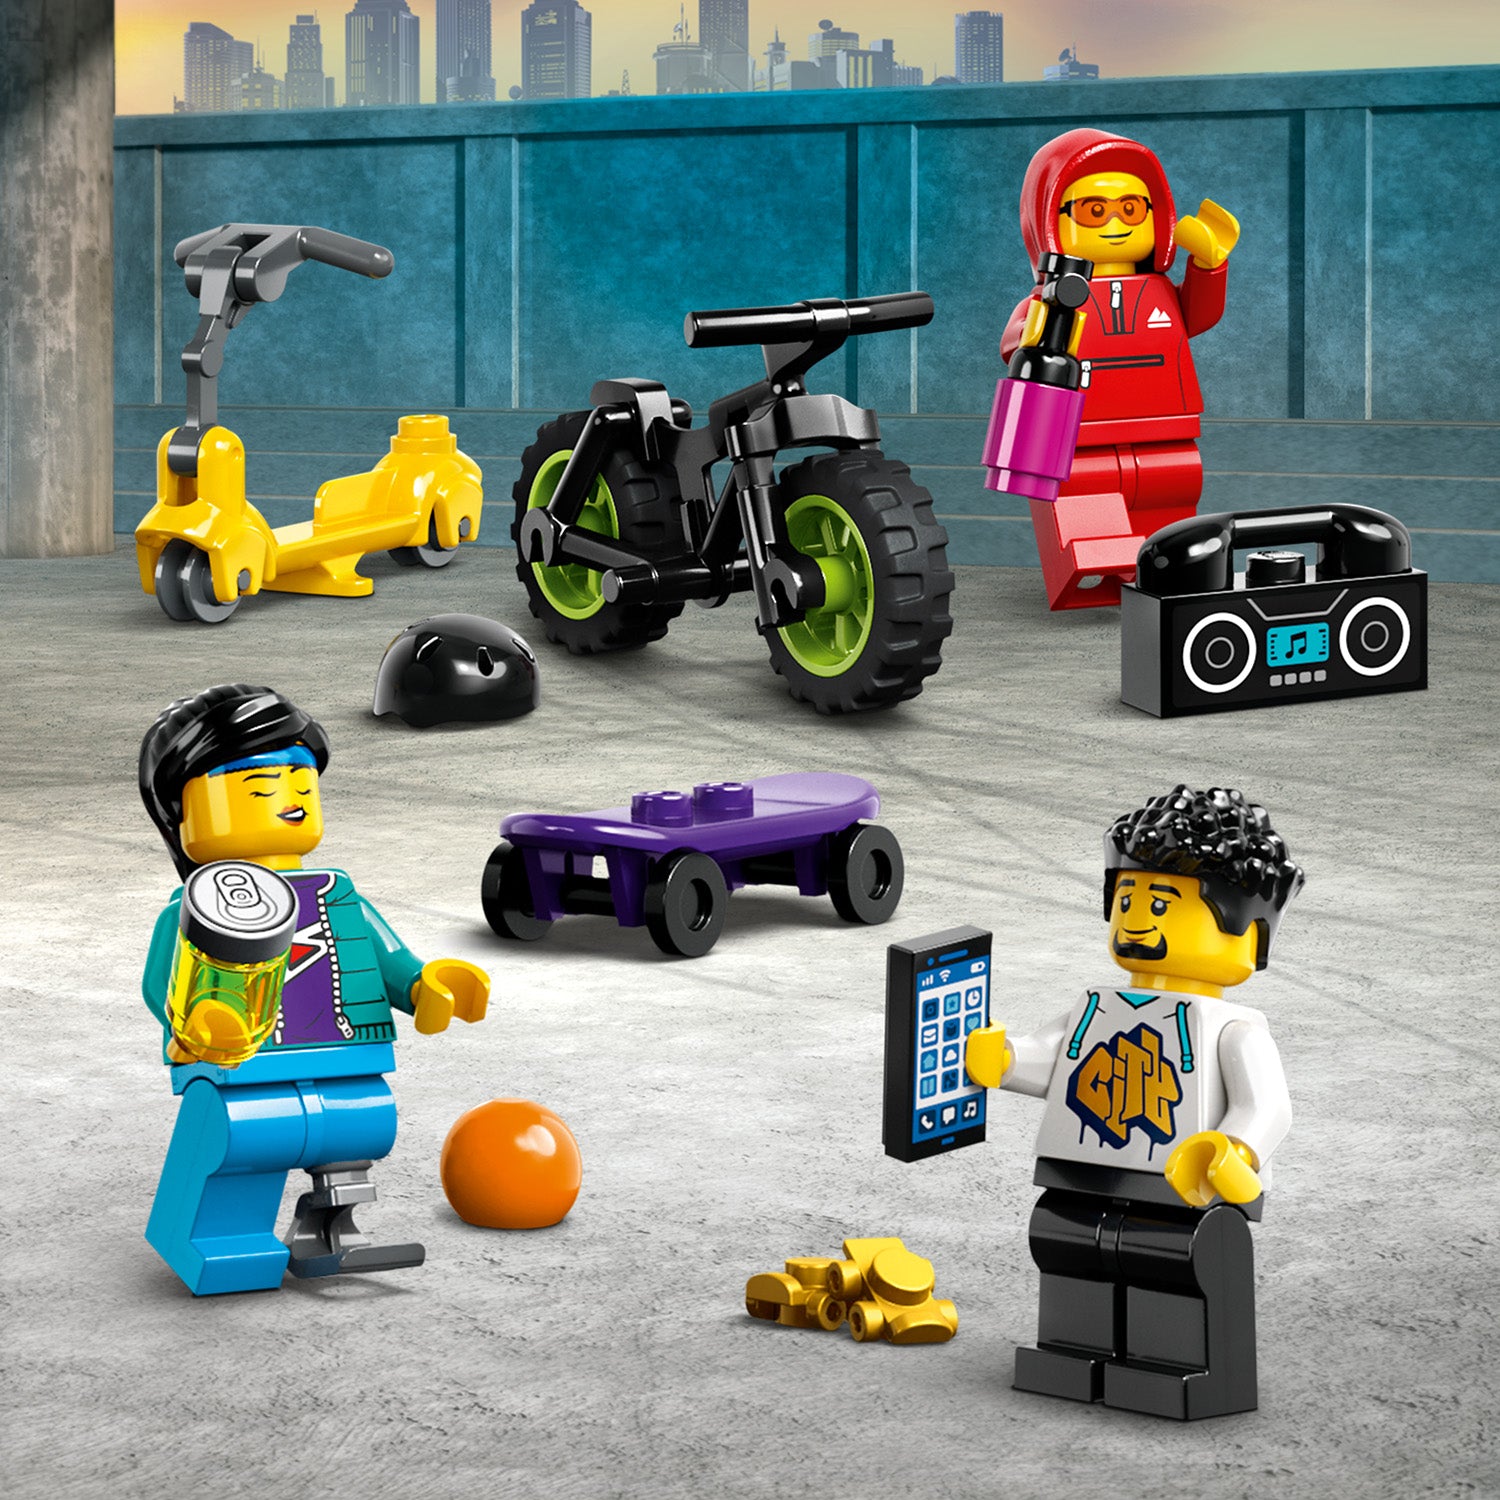 Lego 60364 Street Skate Park